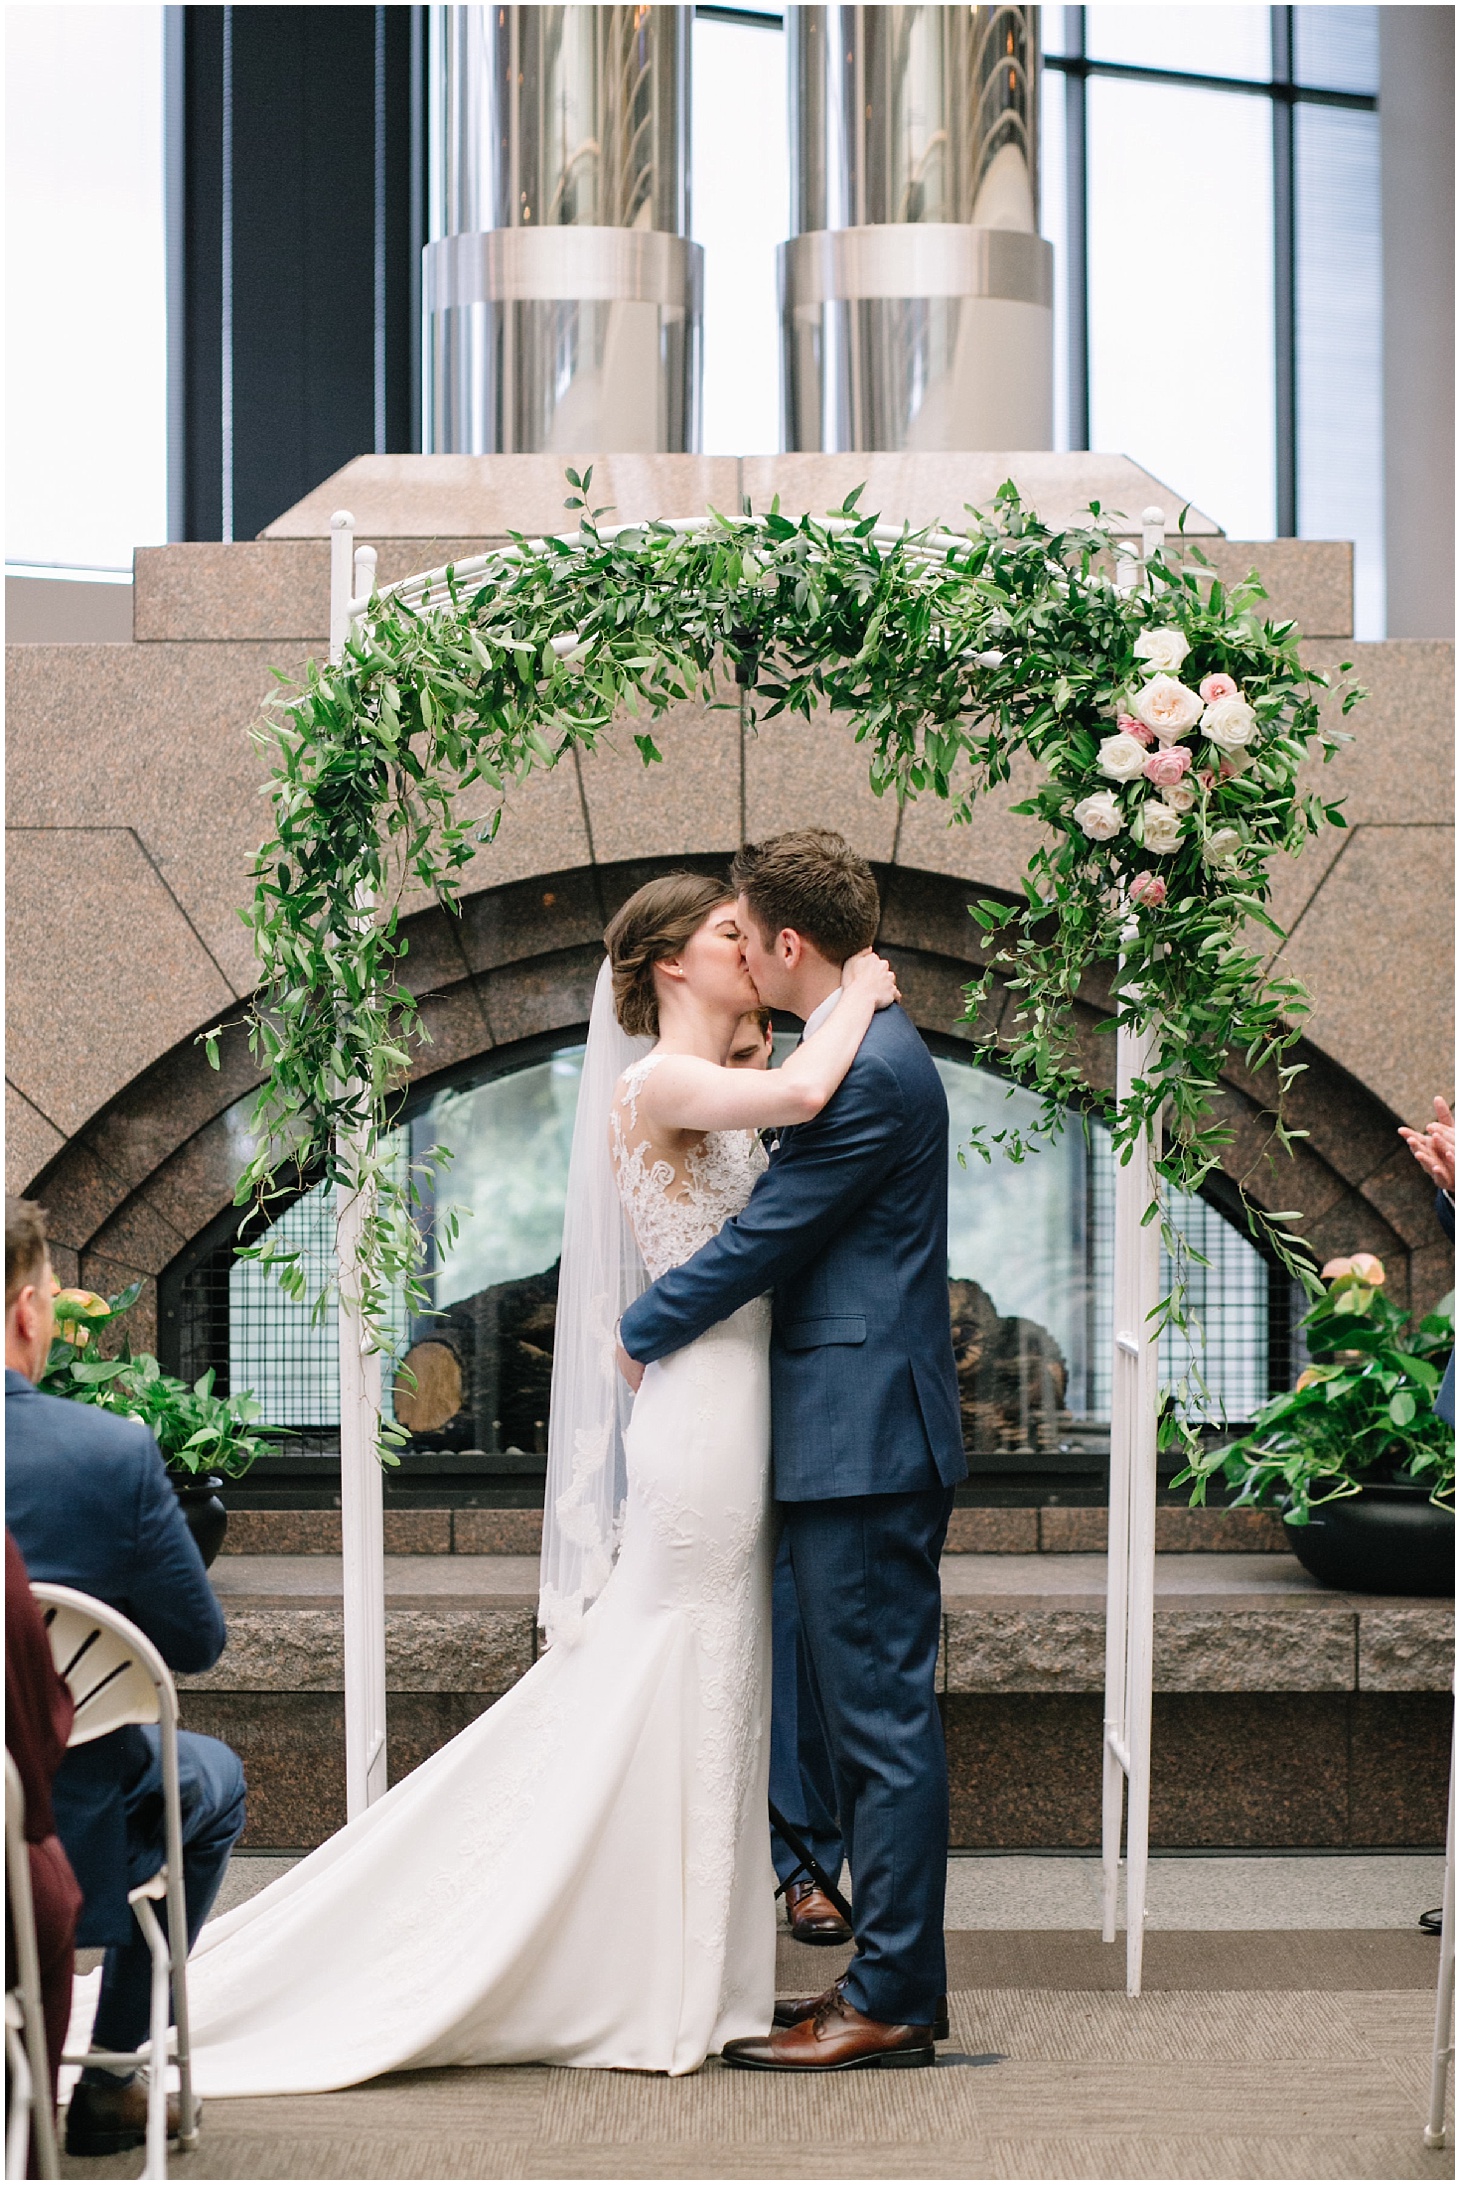 Nature-inspired wedding in Minnesota